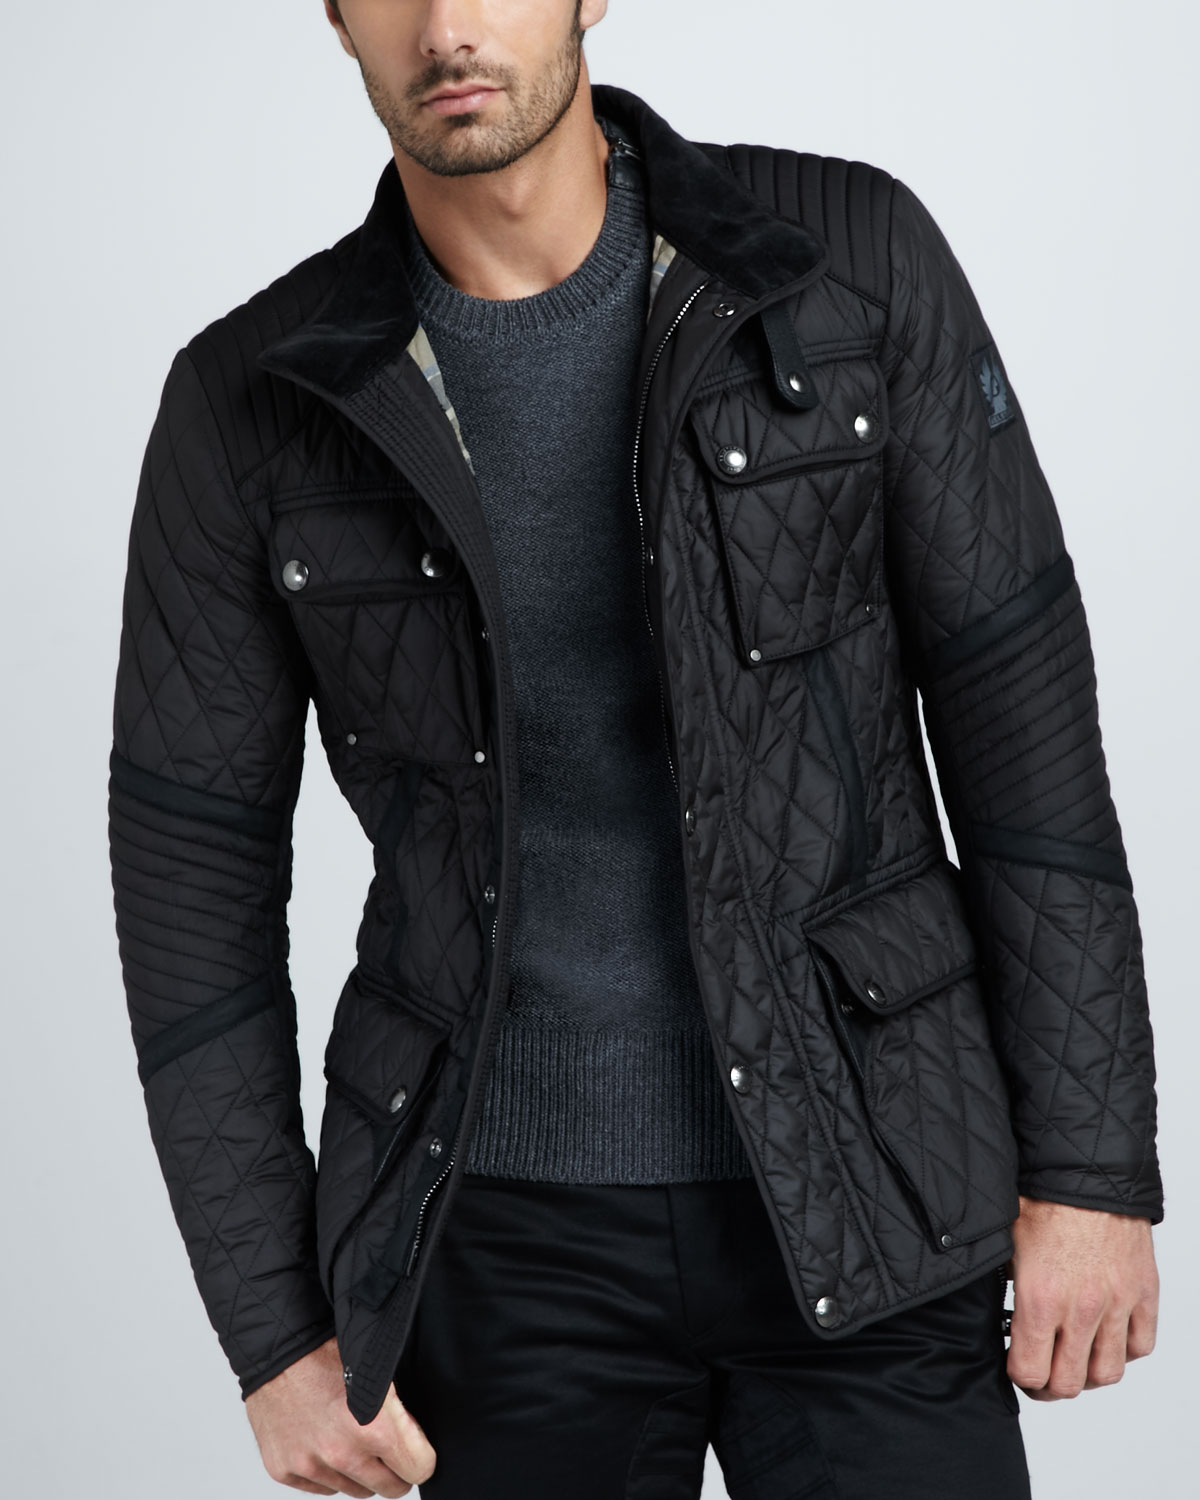 Lyst - Belstaff Stourbridge Quilted Puffer Jacket in Black for Men